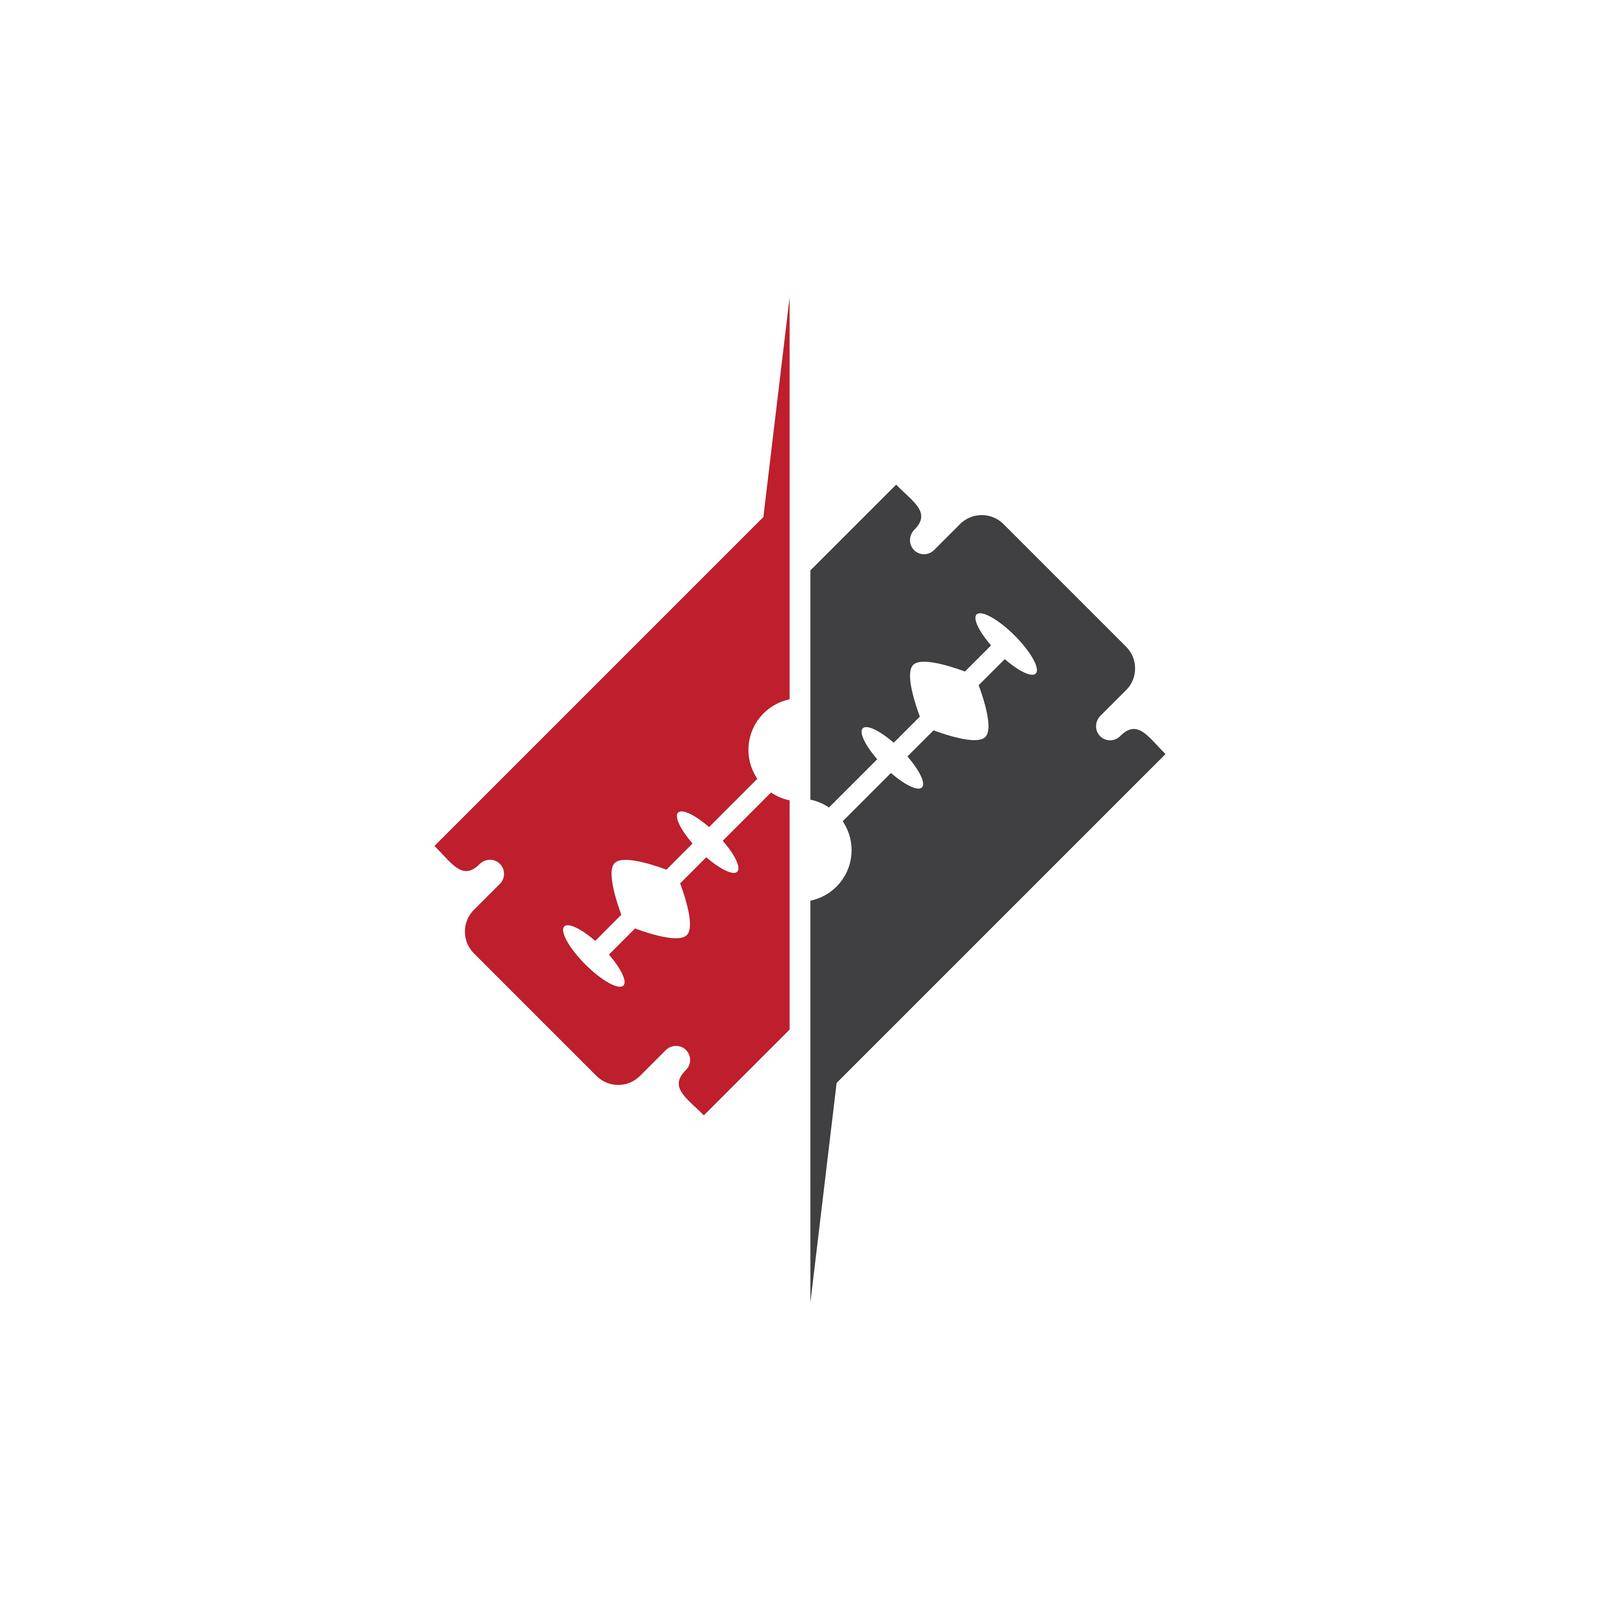 Razor blade logo vector illustration flat design